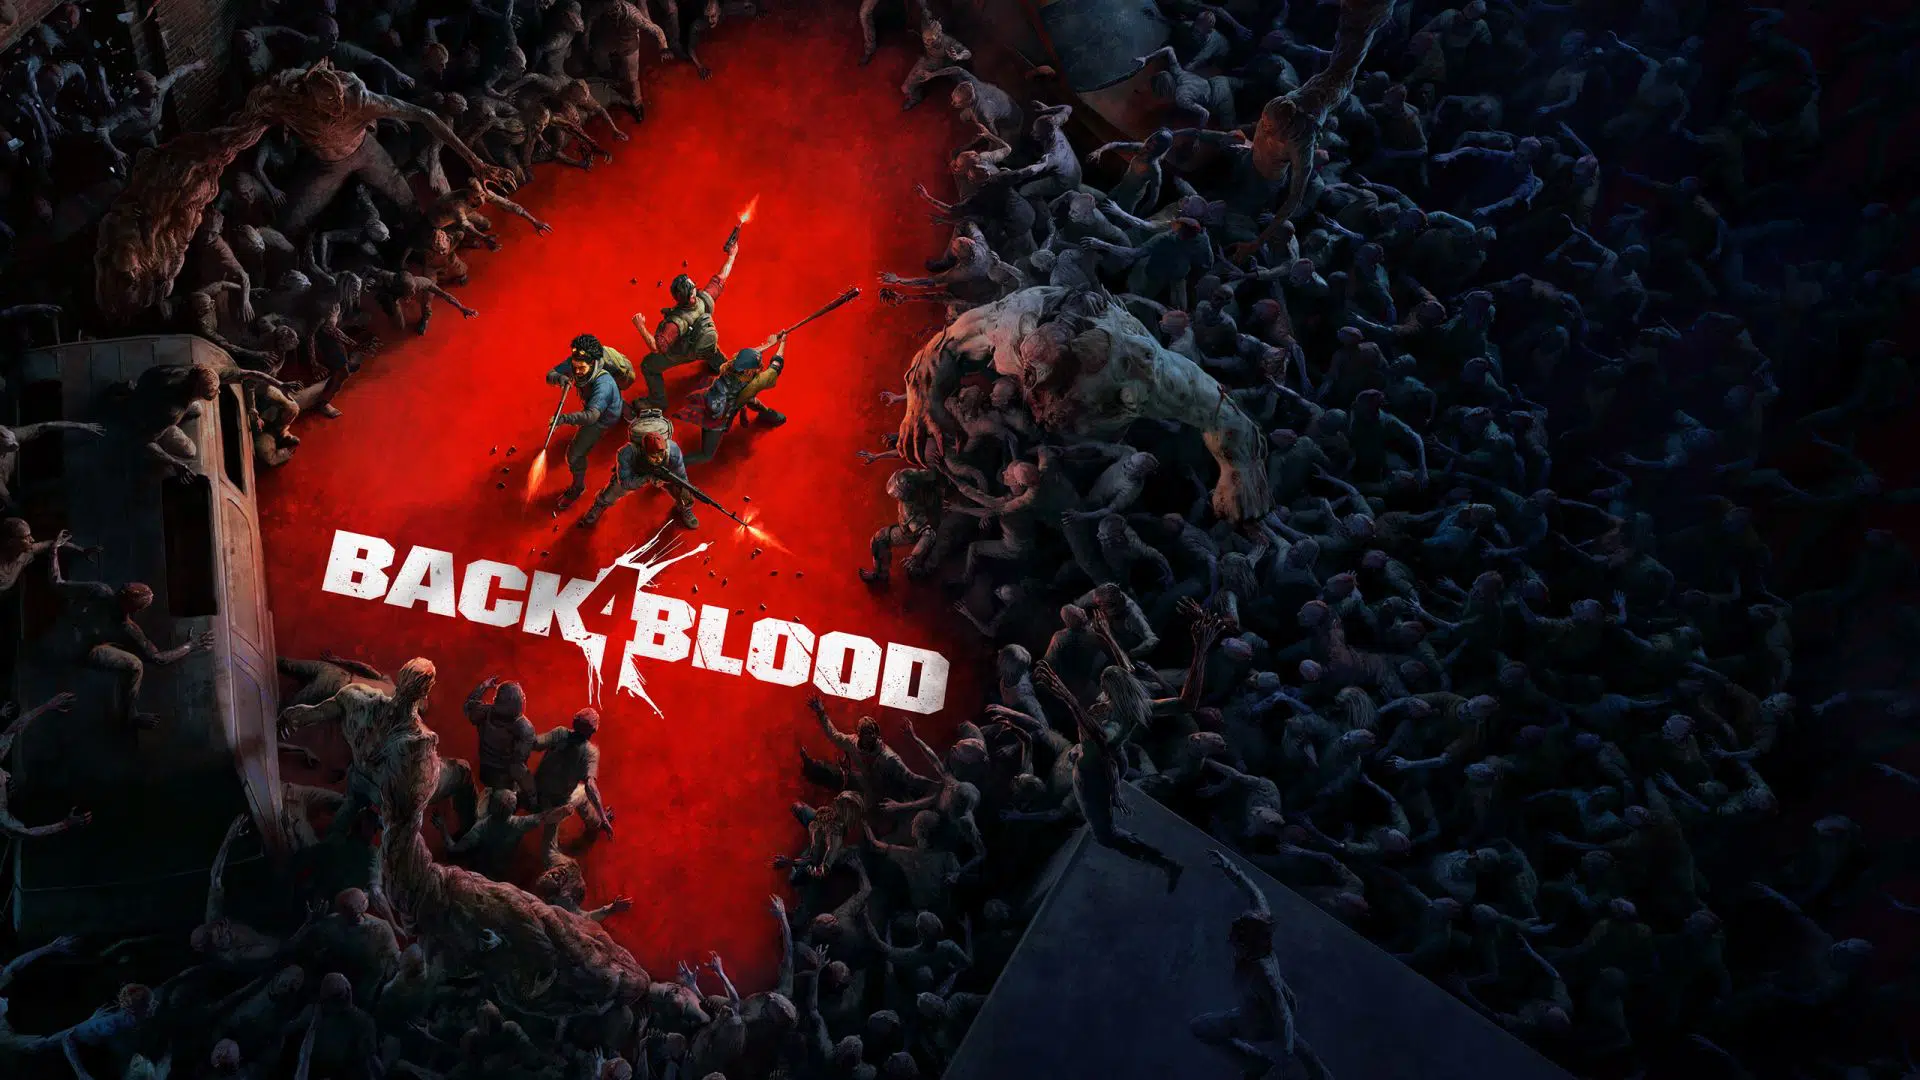 back 4 blood launch trailer